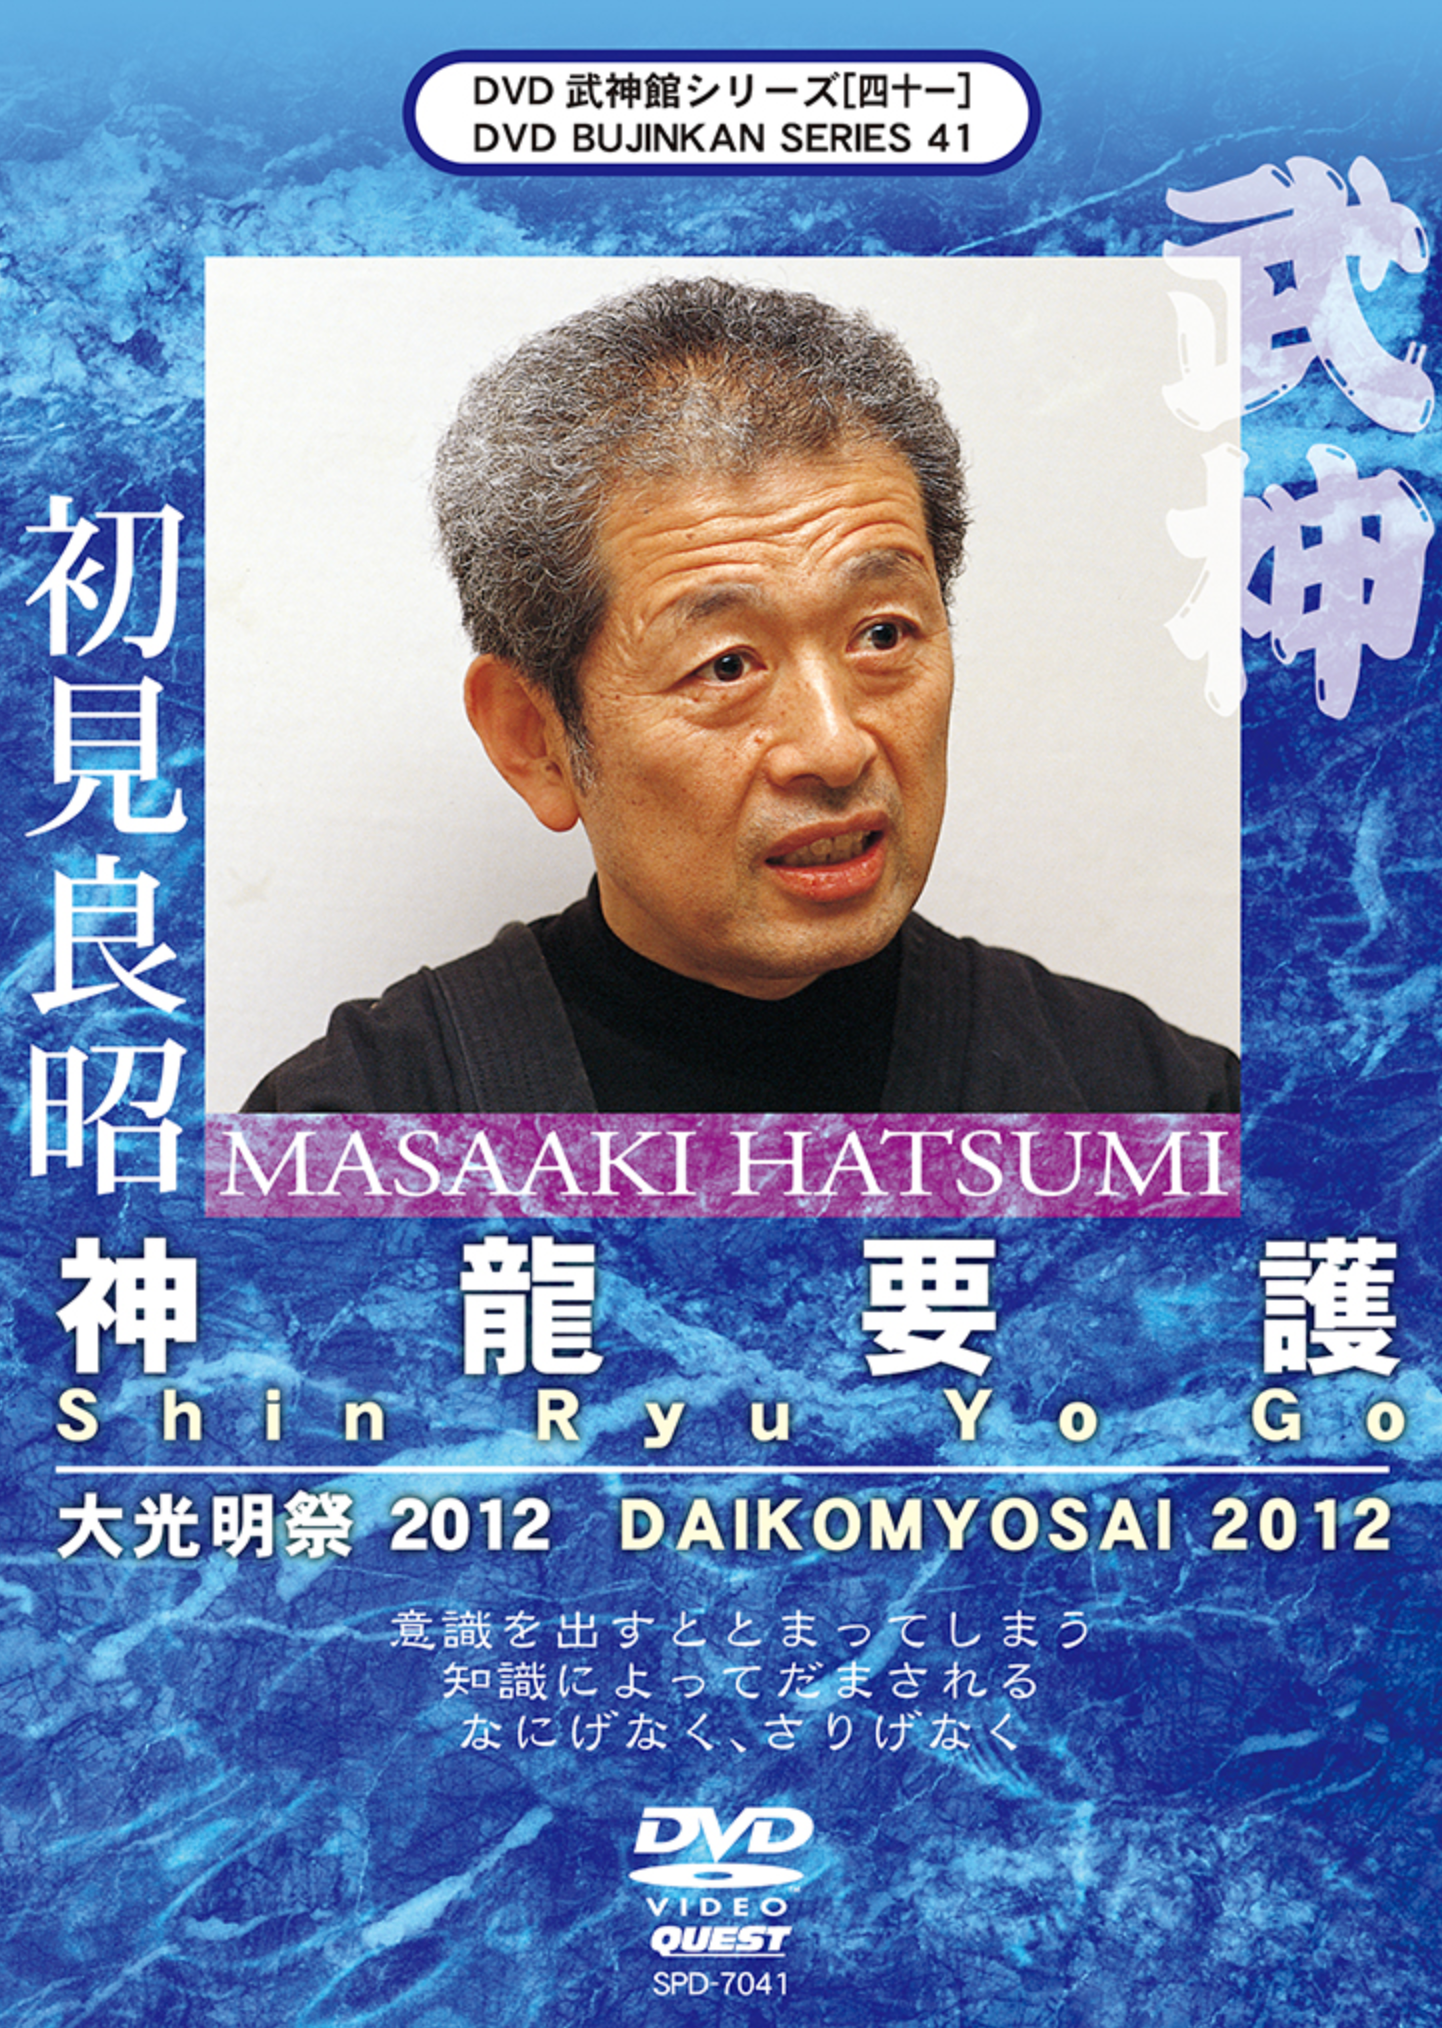 Bujinkan DVD Series 41: Shin Ryu Yo Go with Masaaki Hatsumi - Budovideos Inc